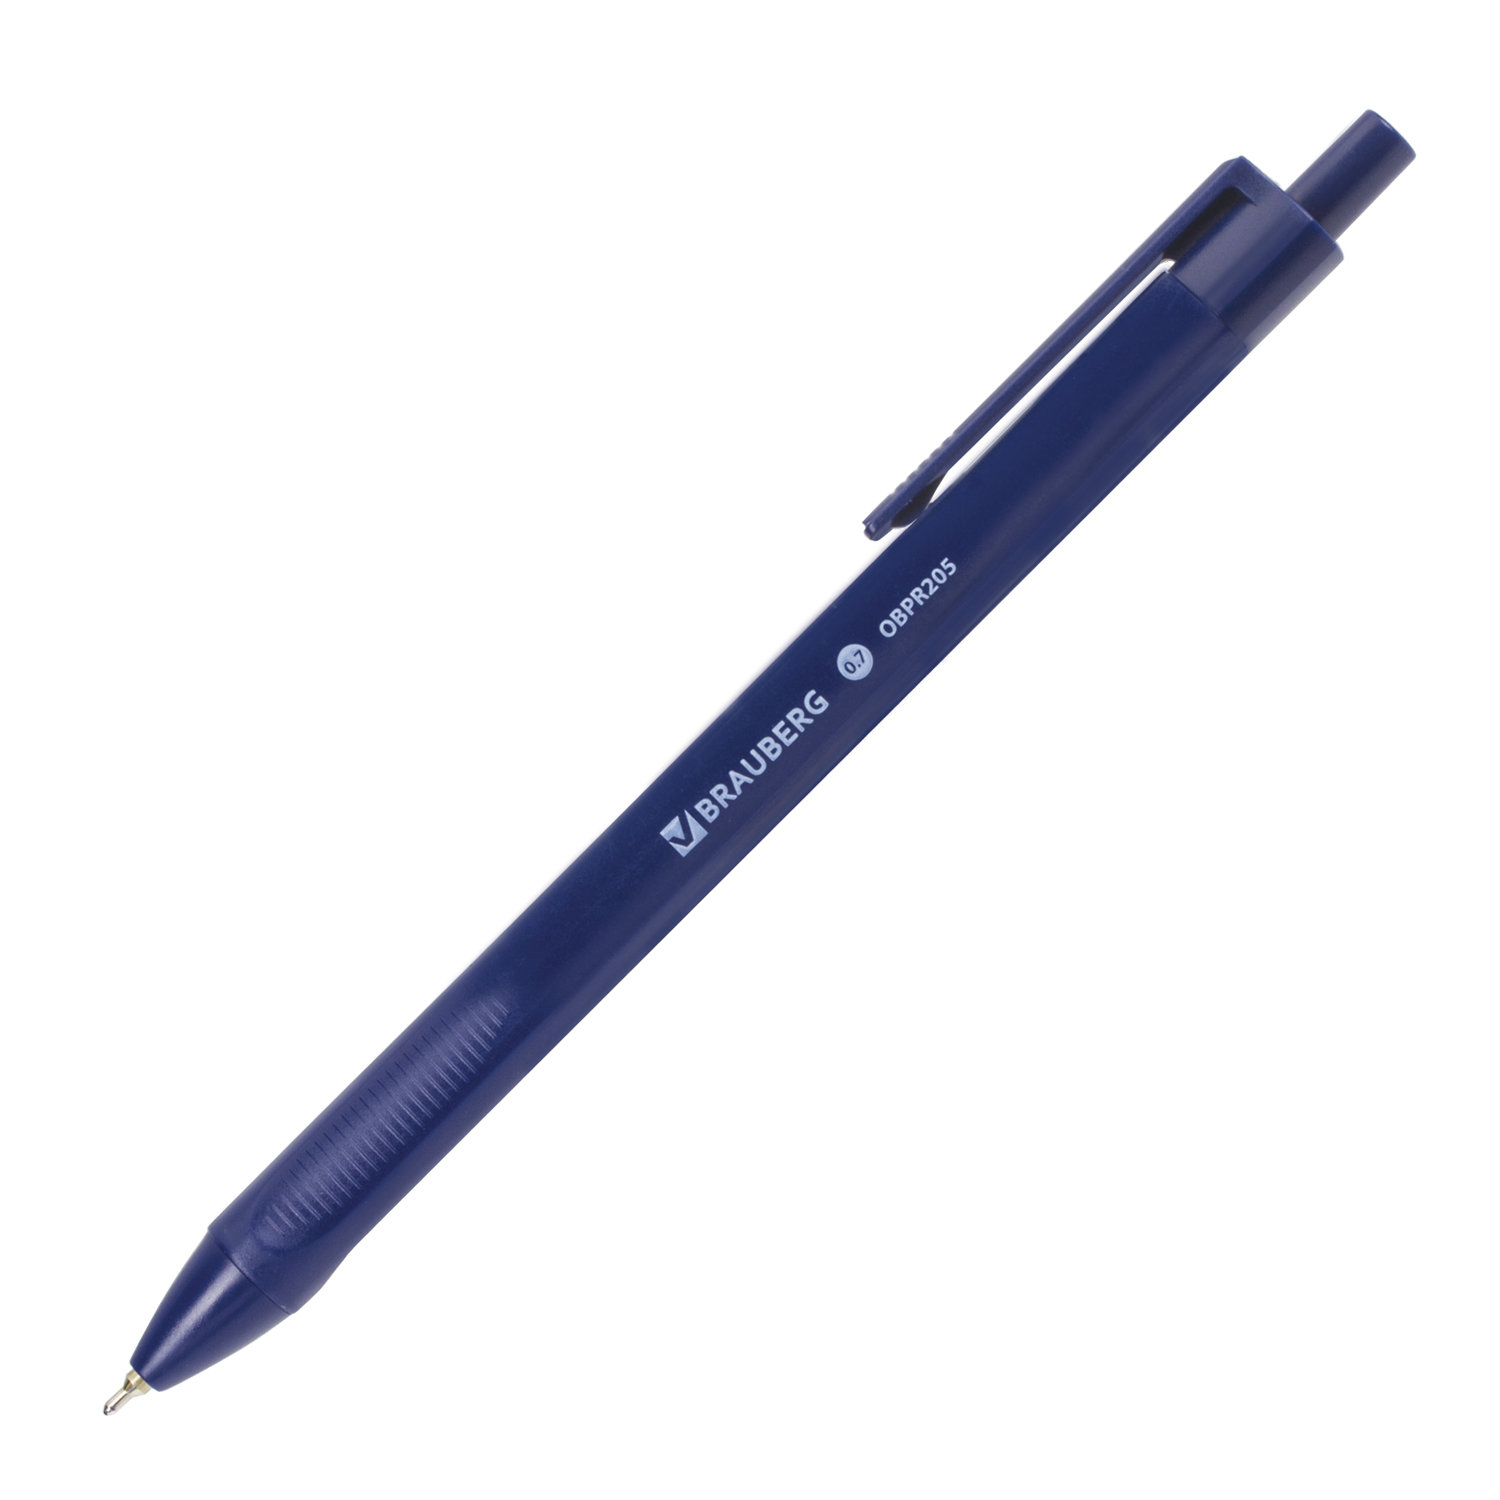 Brauberg 0.7. Ручка шариковая масляная автоматическая BRAUBERG. Ручка БРАУБЕРГ 0.7. БРАУБЕРГ ручка синяя автомат. Ручка BRAUBERG 0.7 мм автоматическая.